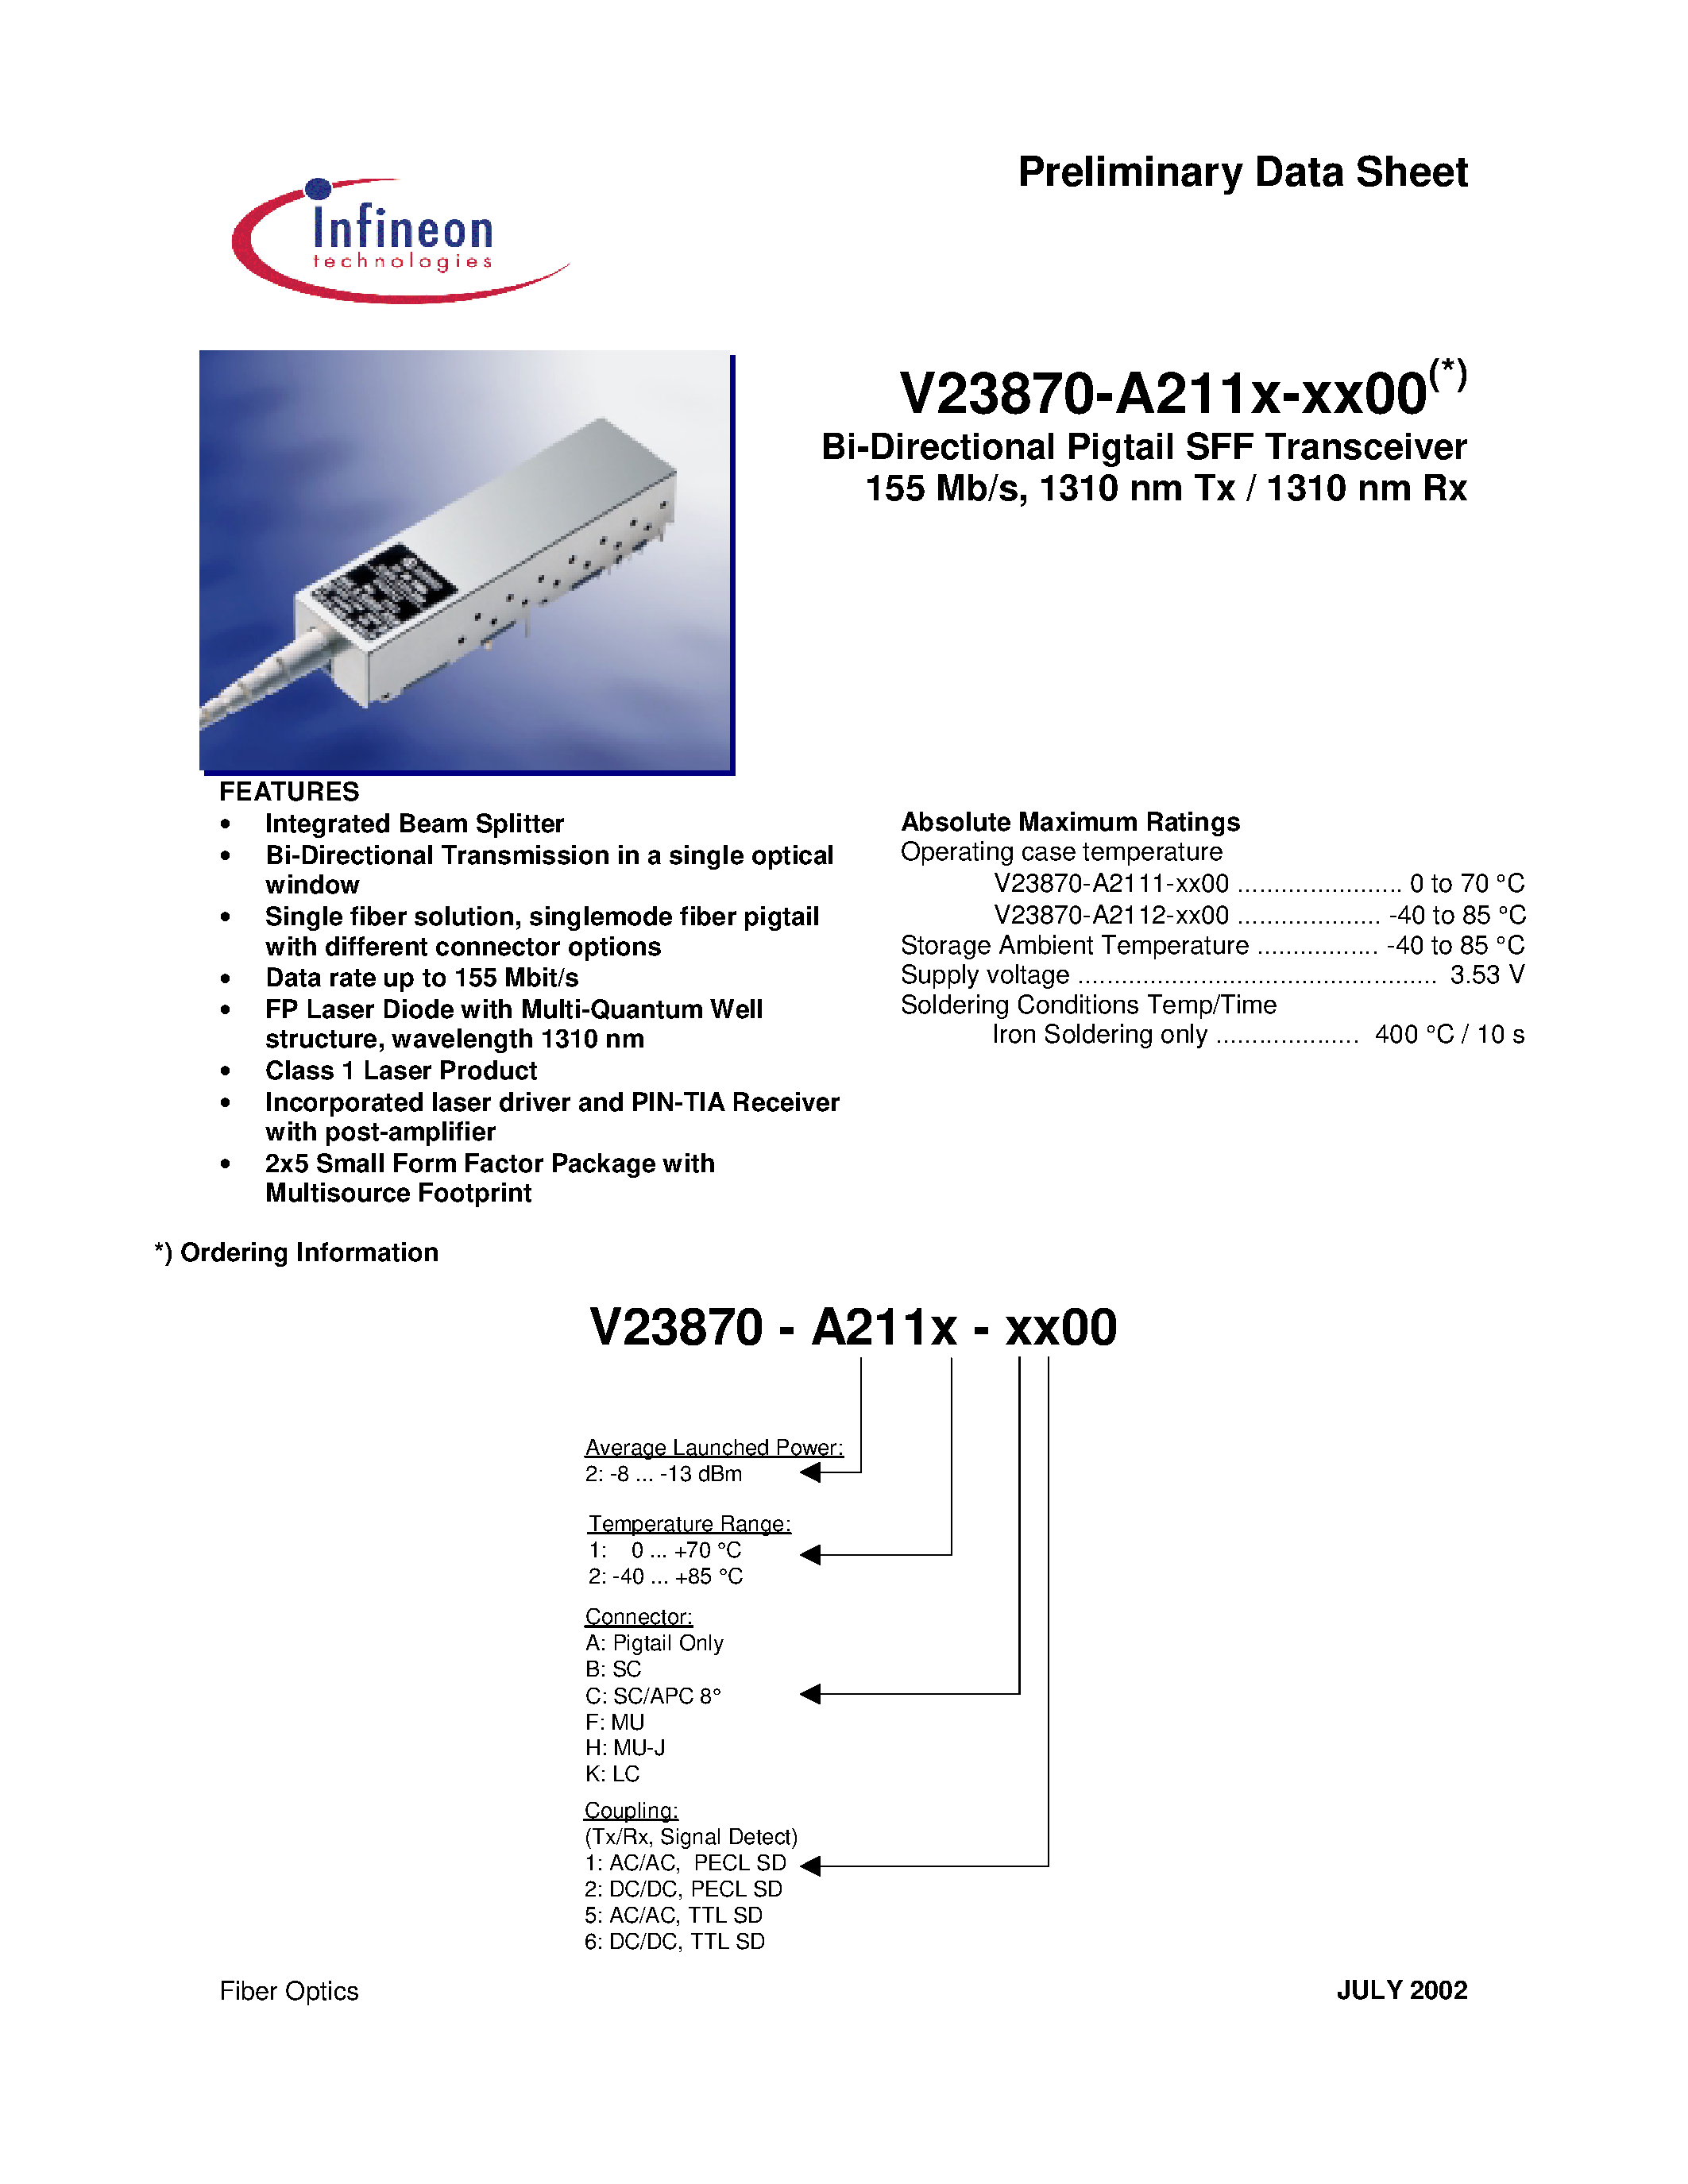 Даташит V23870-A2111-A100 - Bi-Directional Pigtail SFF Transceiver 155 Mb/s/ 1310 nm Tx / 1310 nm Rx страница 1